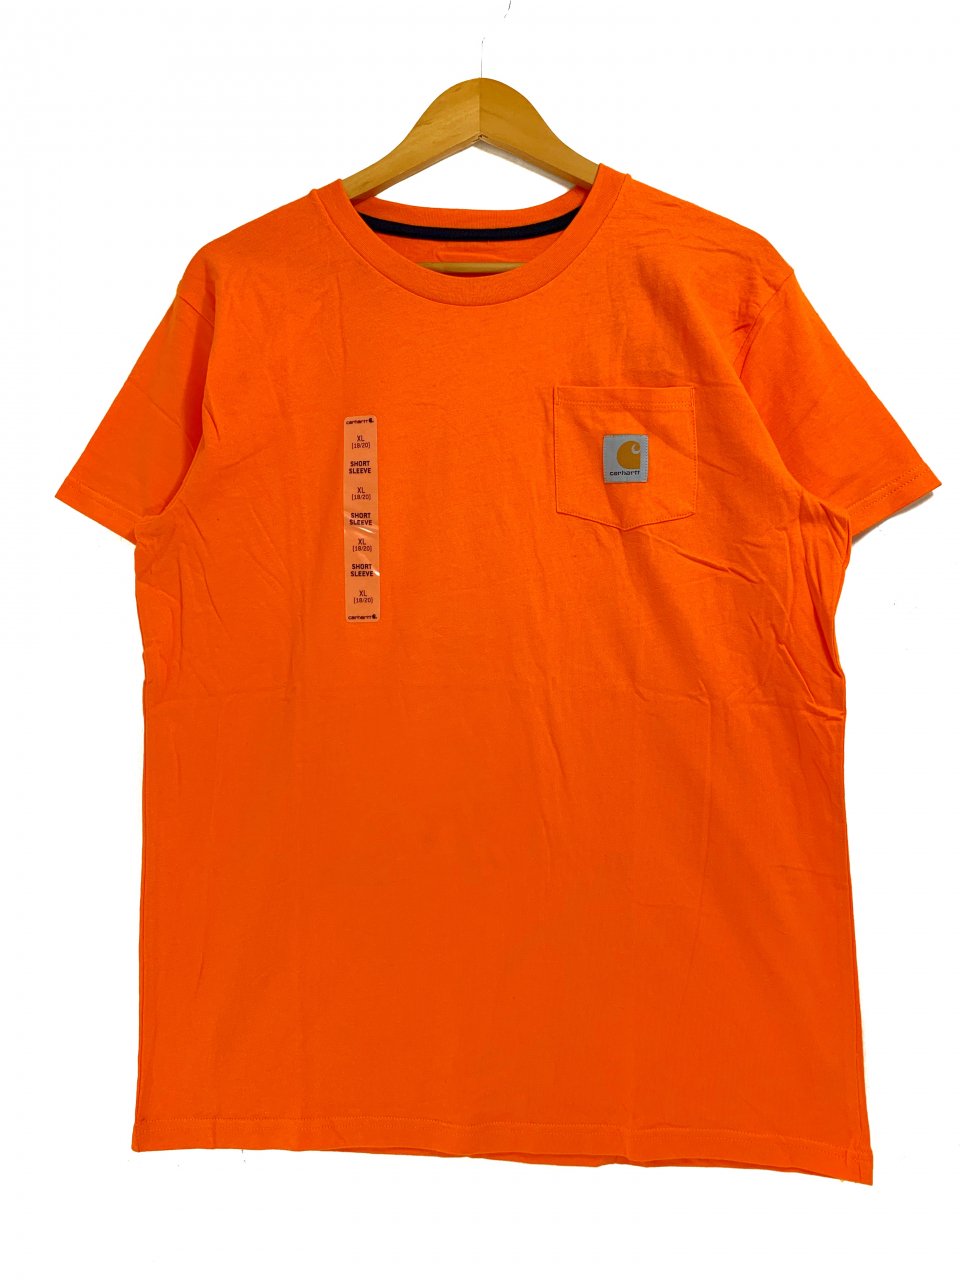 【CHILD&YOUTH】 新品 US企画 Carhartt Pocket S/S Tee (ORANGE) カーハート ポケット付 半袖 Tシャツ  オレンジ チャイルド キッズ ユース レディース - NEWJOKE ONLINE STORE